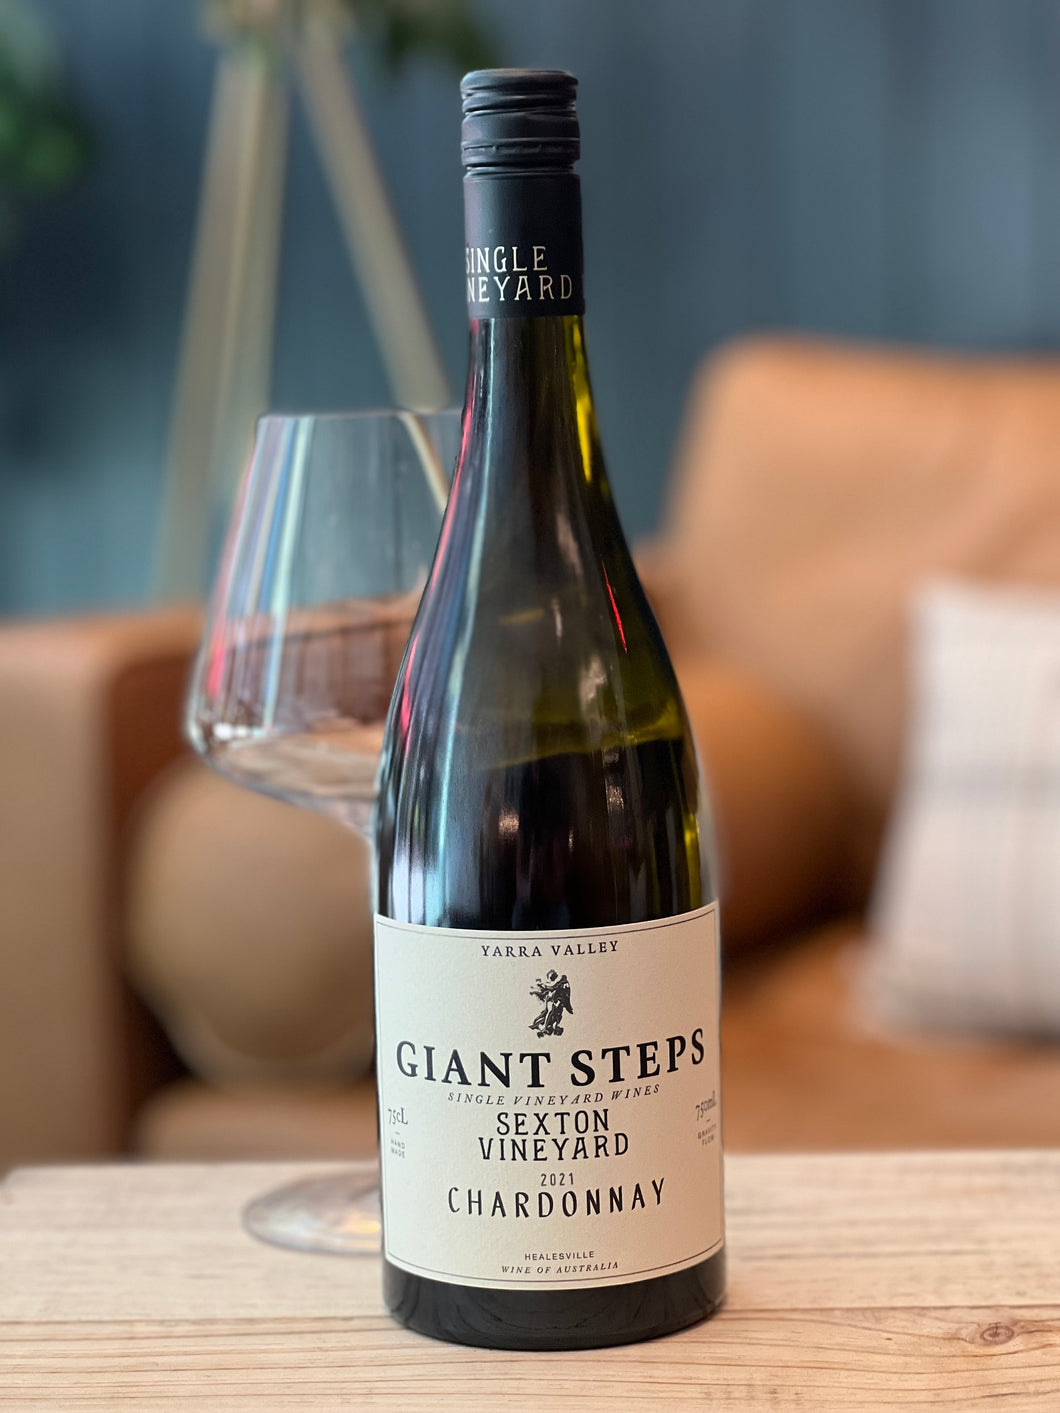 Chardonnay, Giant Steps “Sexton Vineyard” 2021